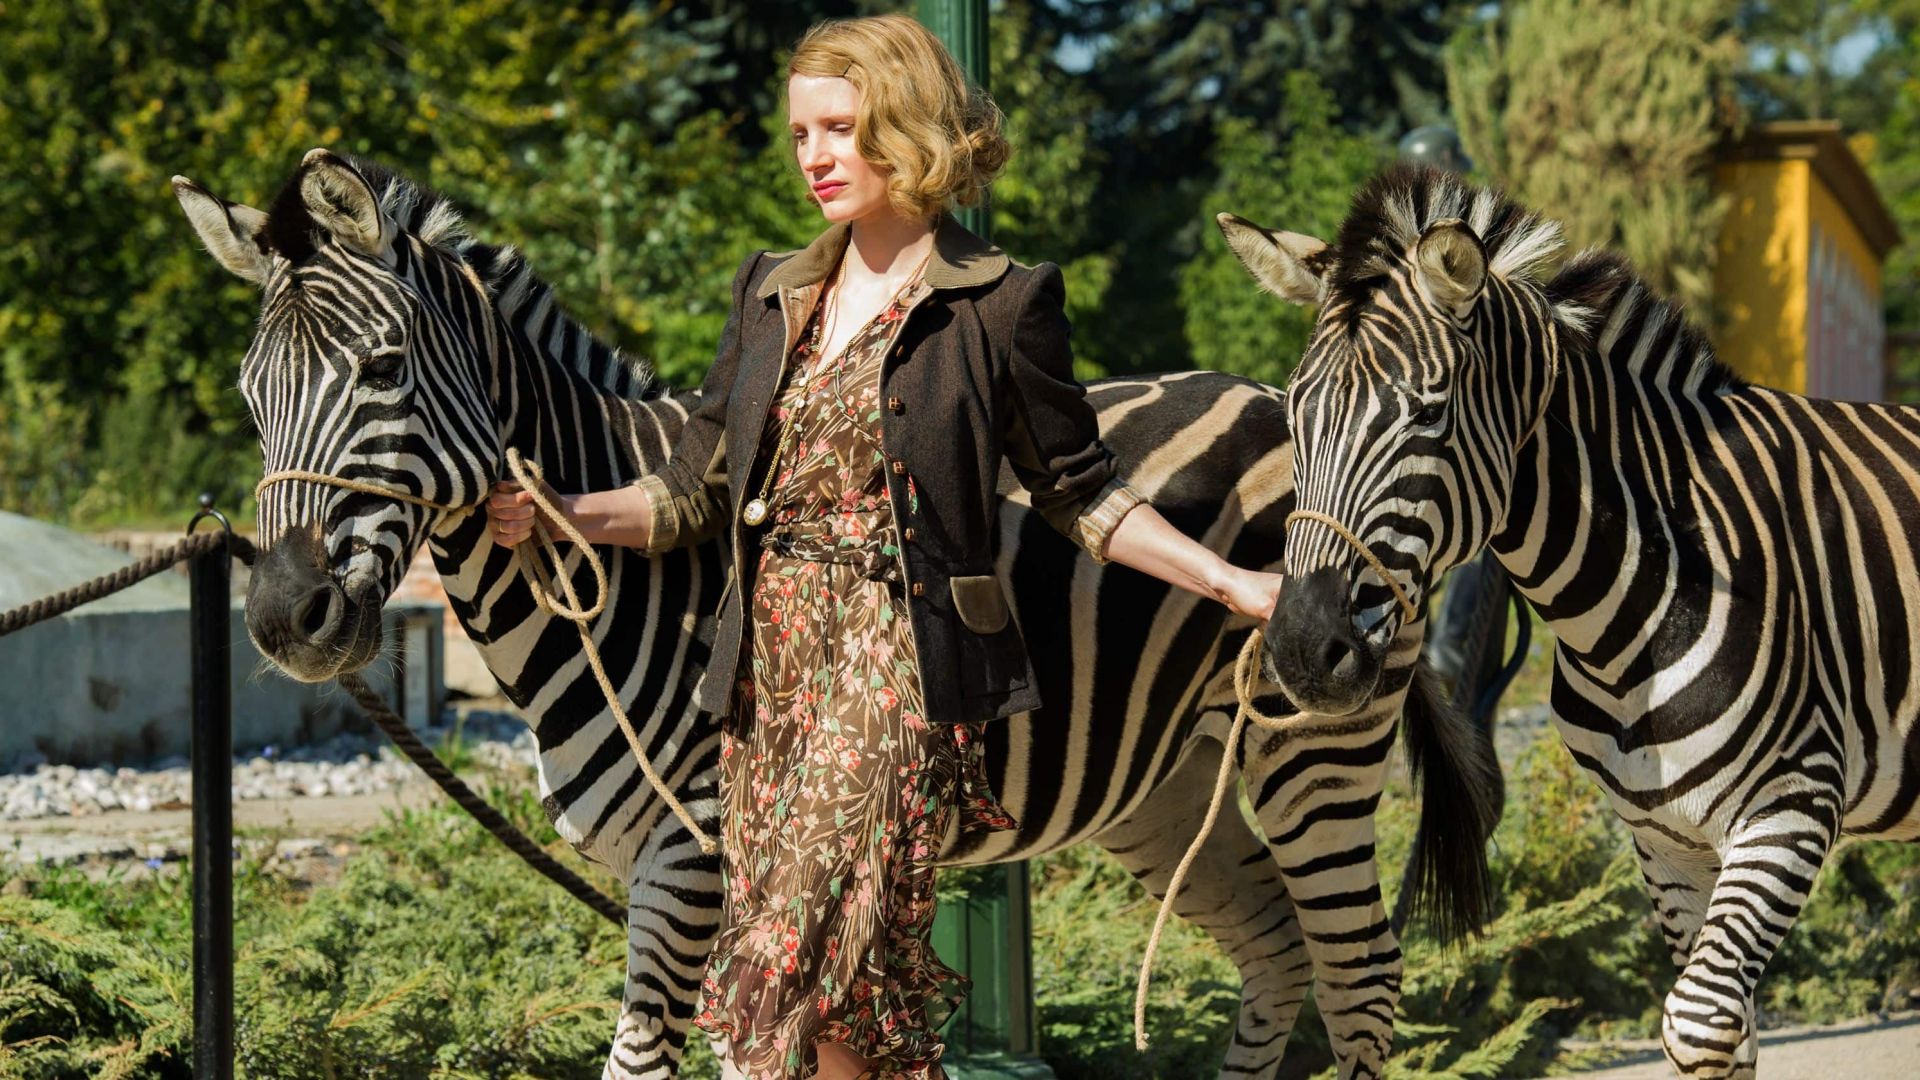 Жена смотрителя зоопарка, Джессика Честейн, зебра, лучшие фильмы, The Zookeeper's Wife, Jessica Chastain, zebra, best movies (horizontal)